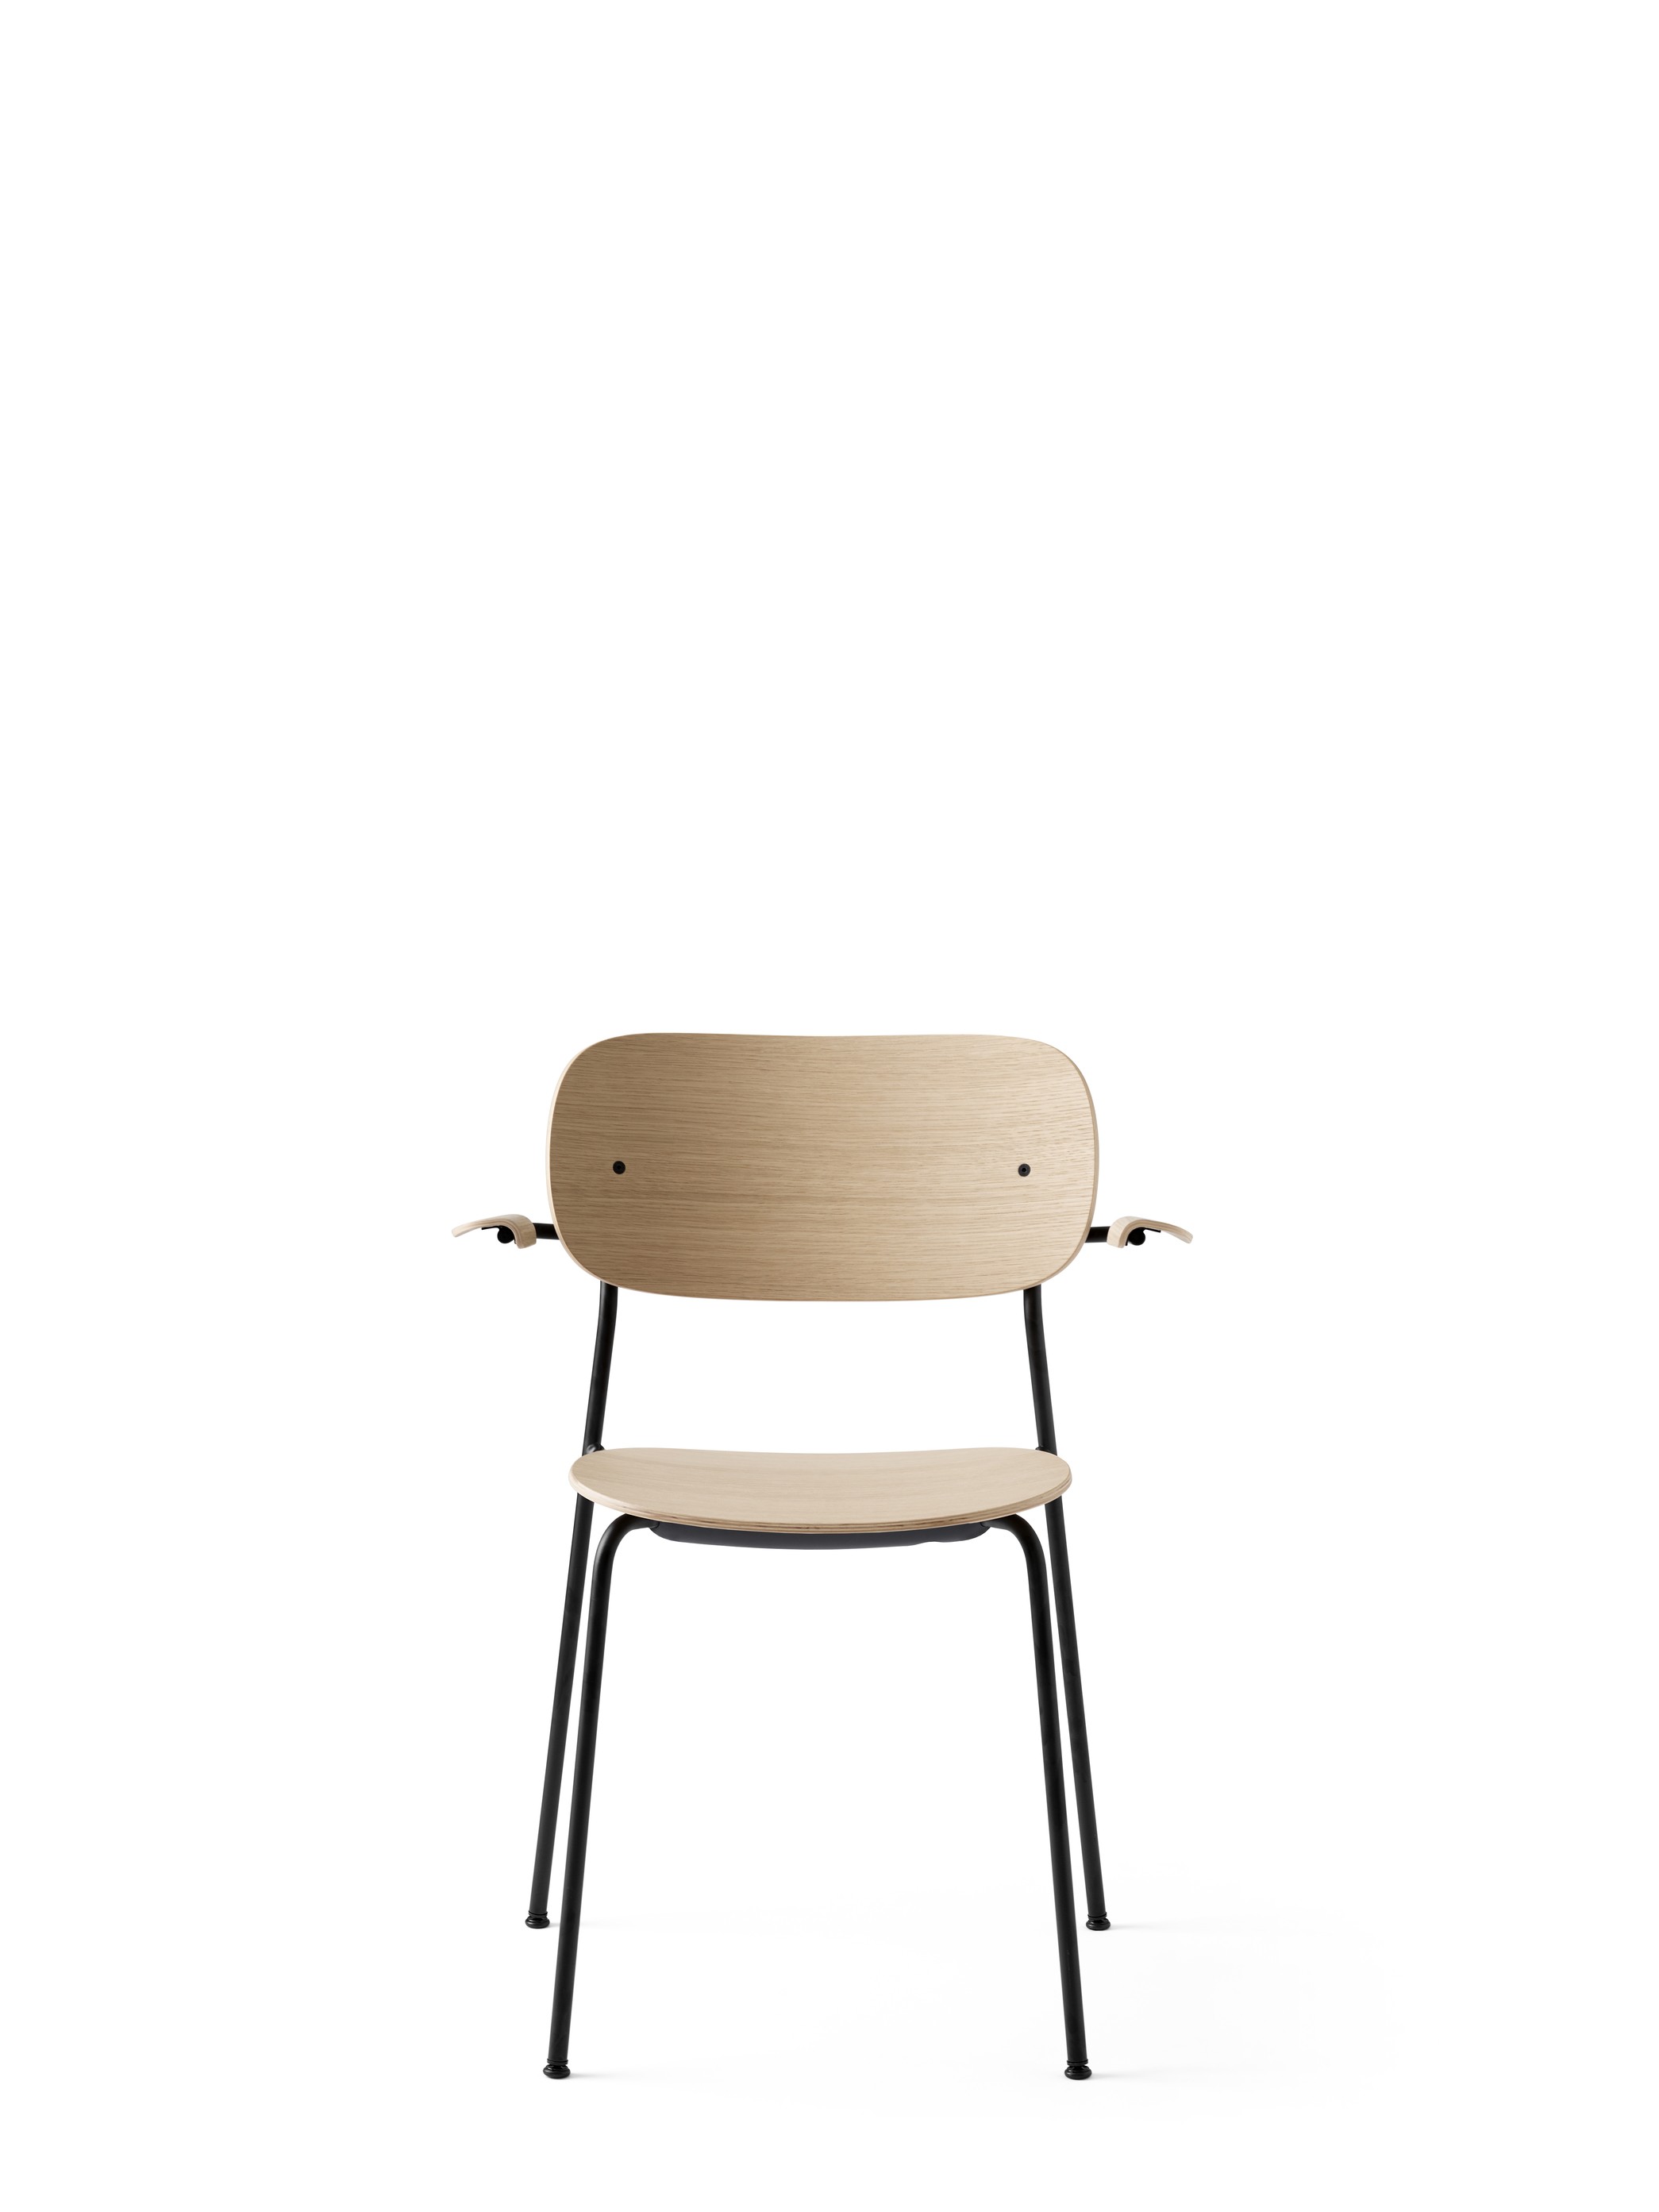 Menu Co Chair Dining Chair Black Steel Base Natural Oak Seat and Back mit Lehne Esszimmerstuhl